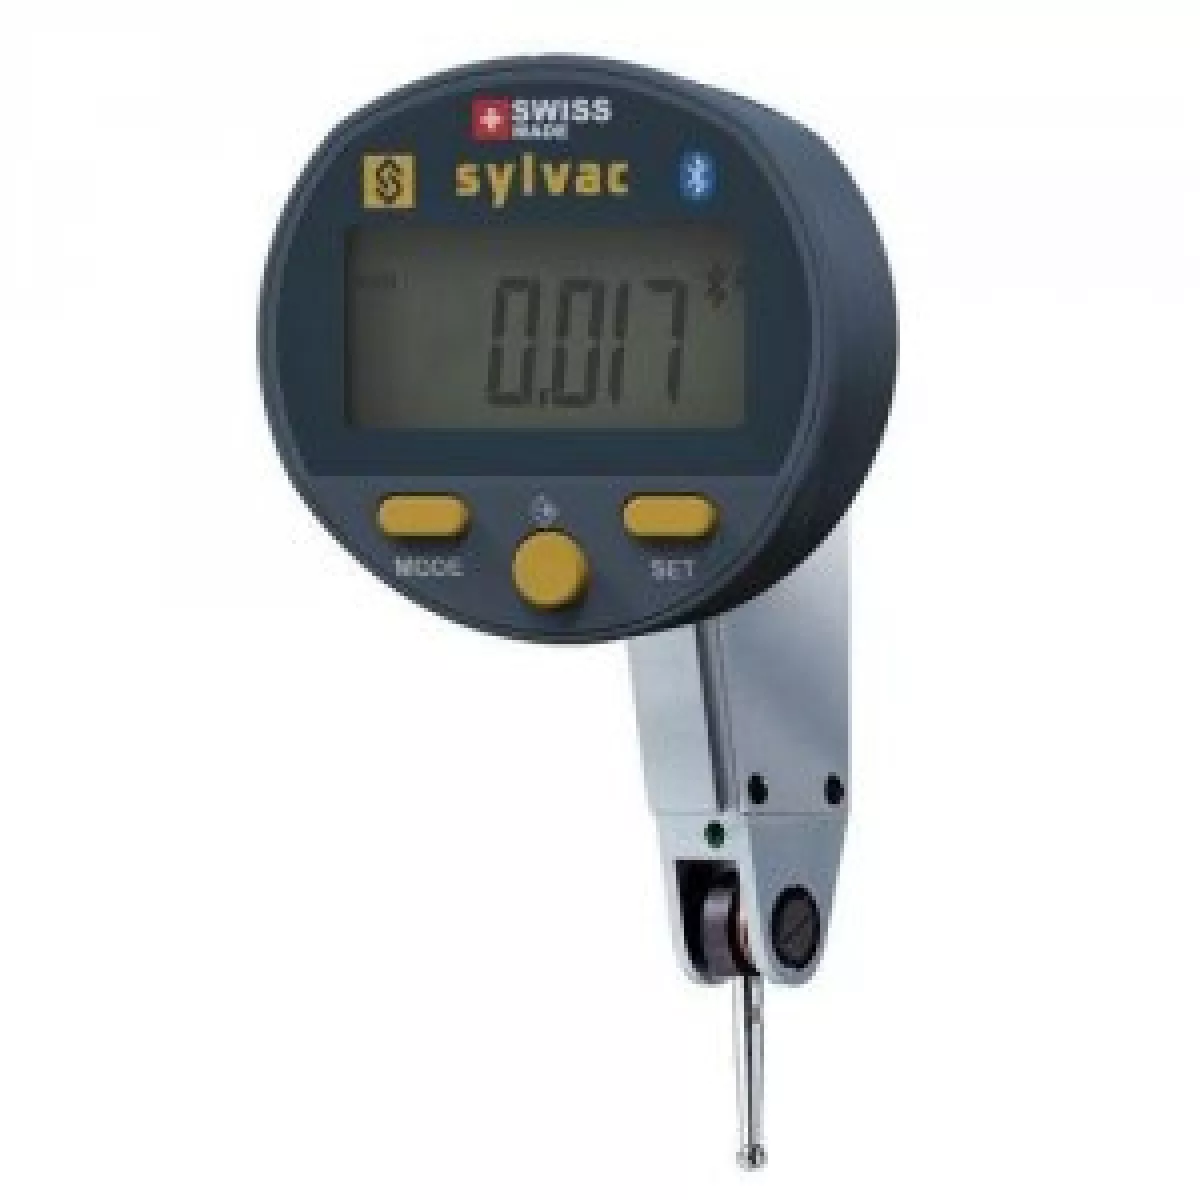 #3 - Sylvac digital vippeindikator s_dial test smart 0,8 x 0,001 mm med tastelængde 12,5 mm (905.4321) Diesella